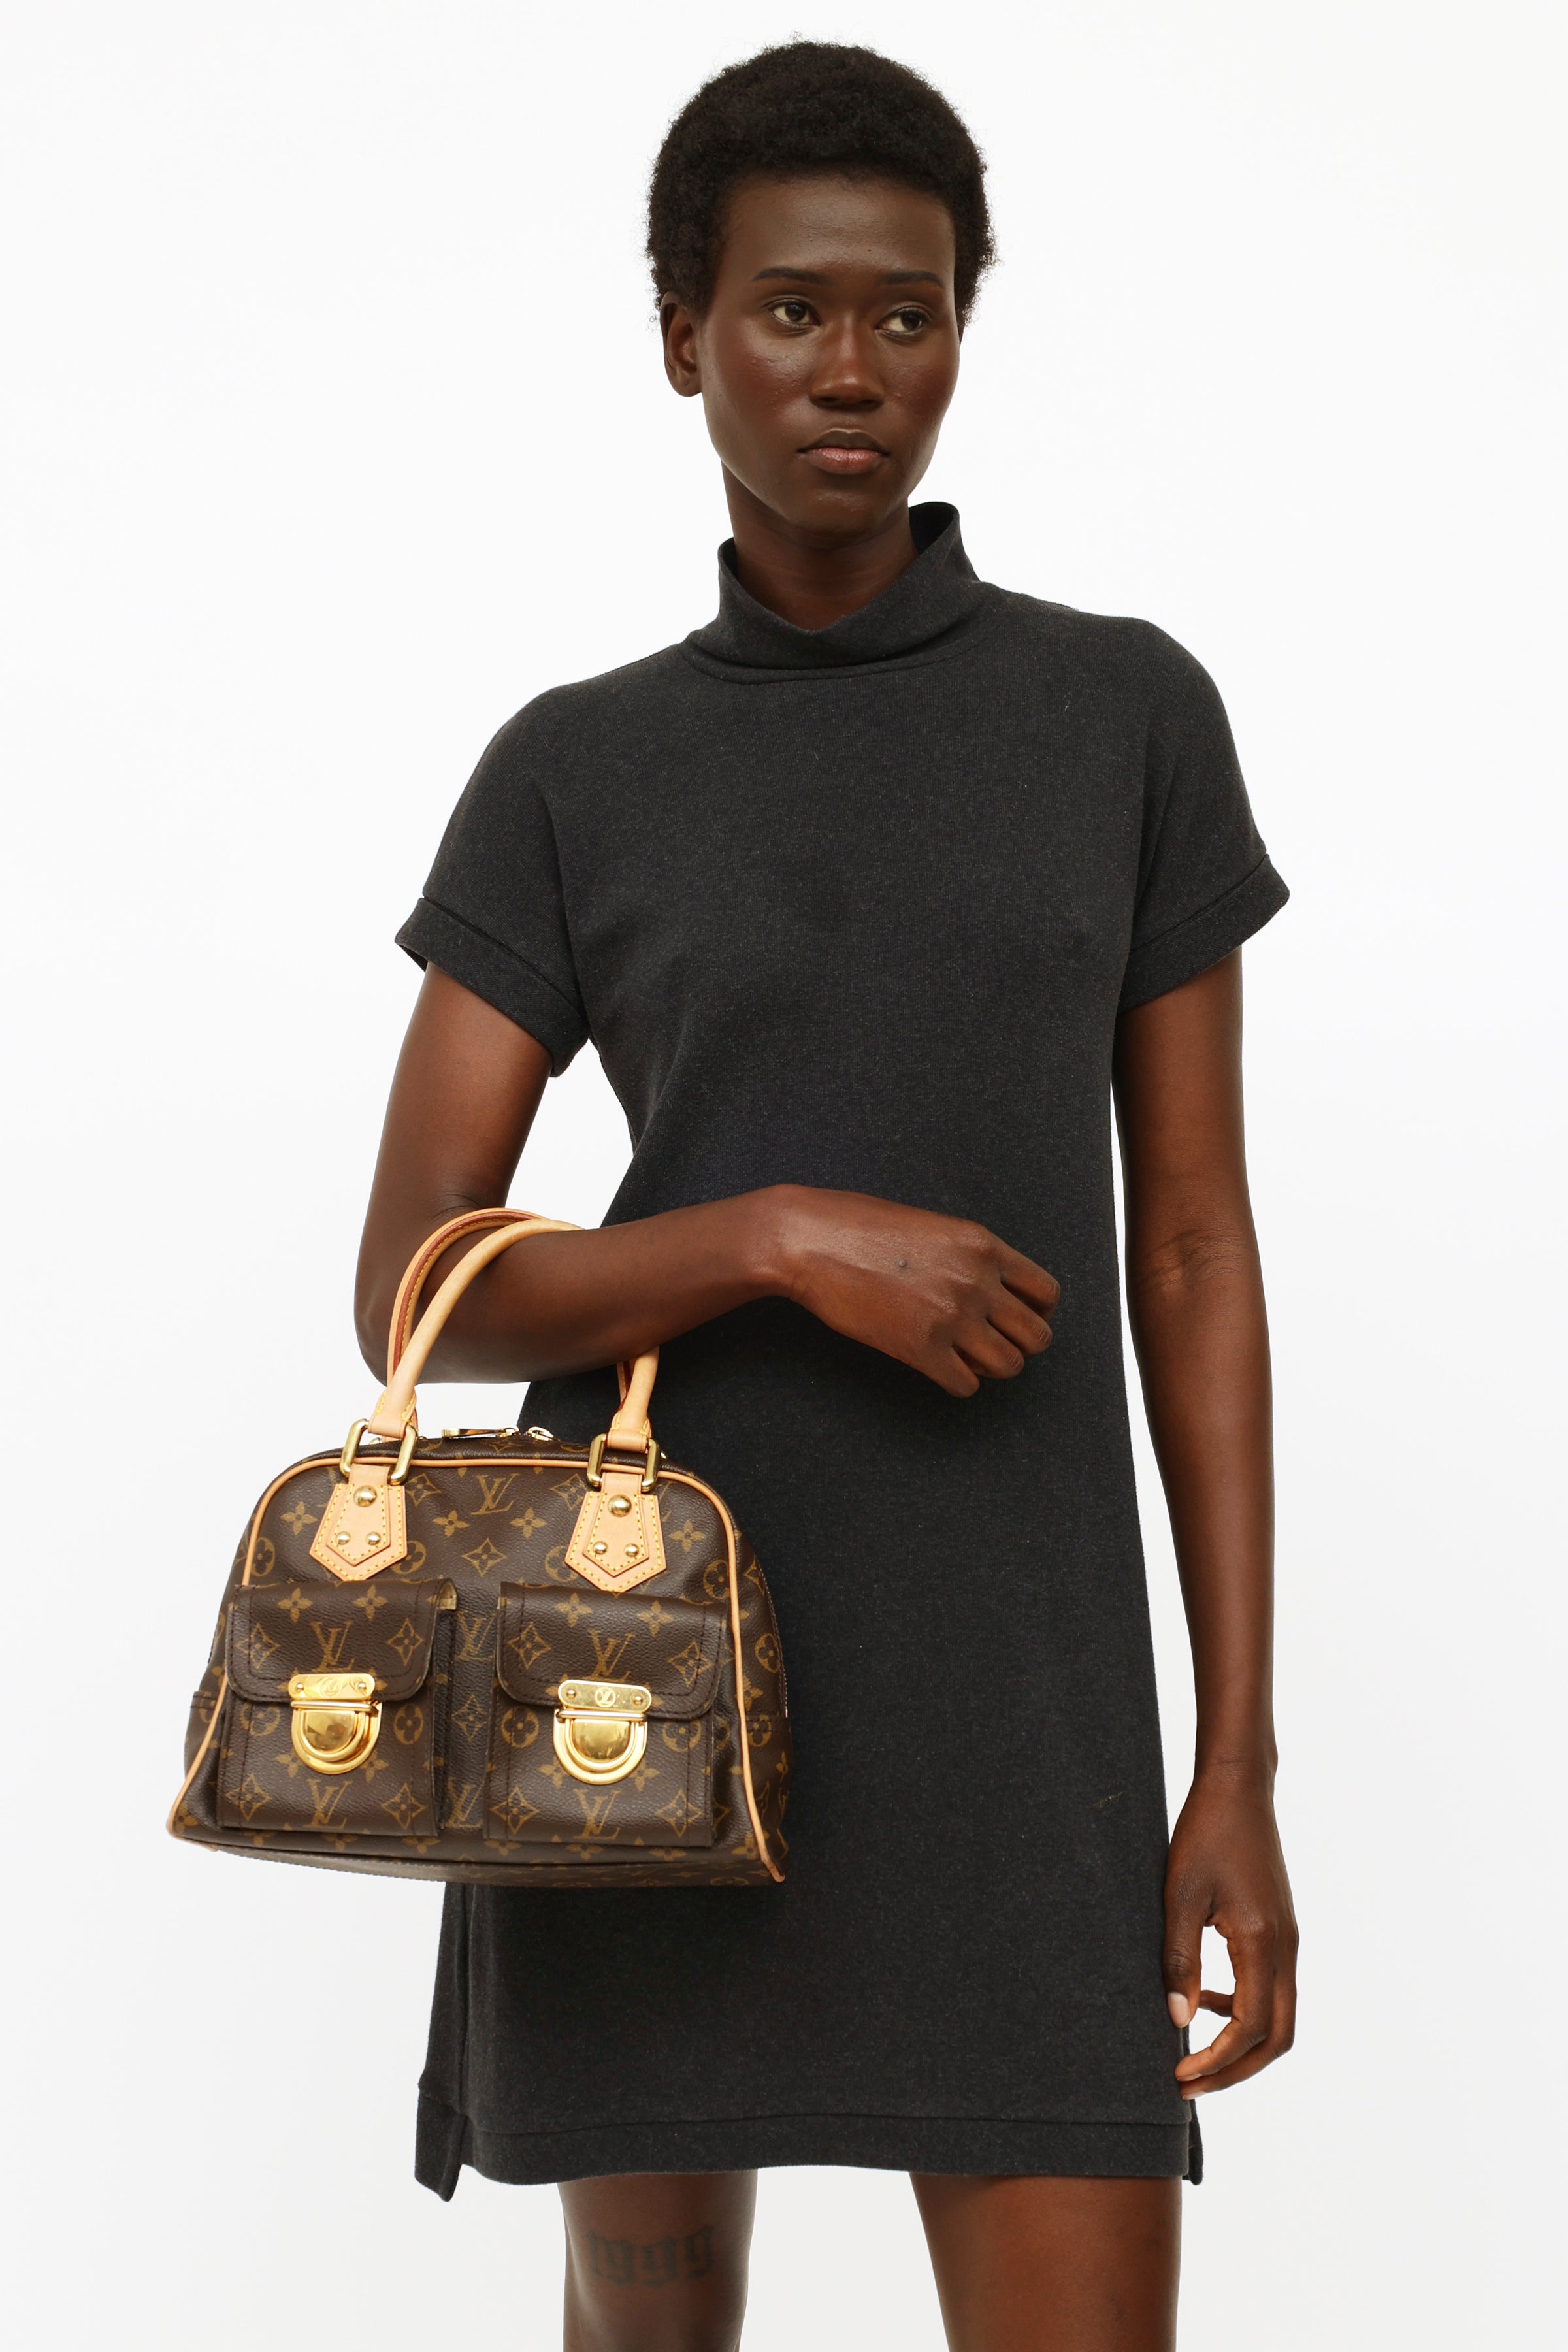 Louis Vuitton Manhattan PM Monogram Top Handle Bag on SALE